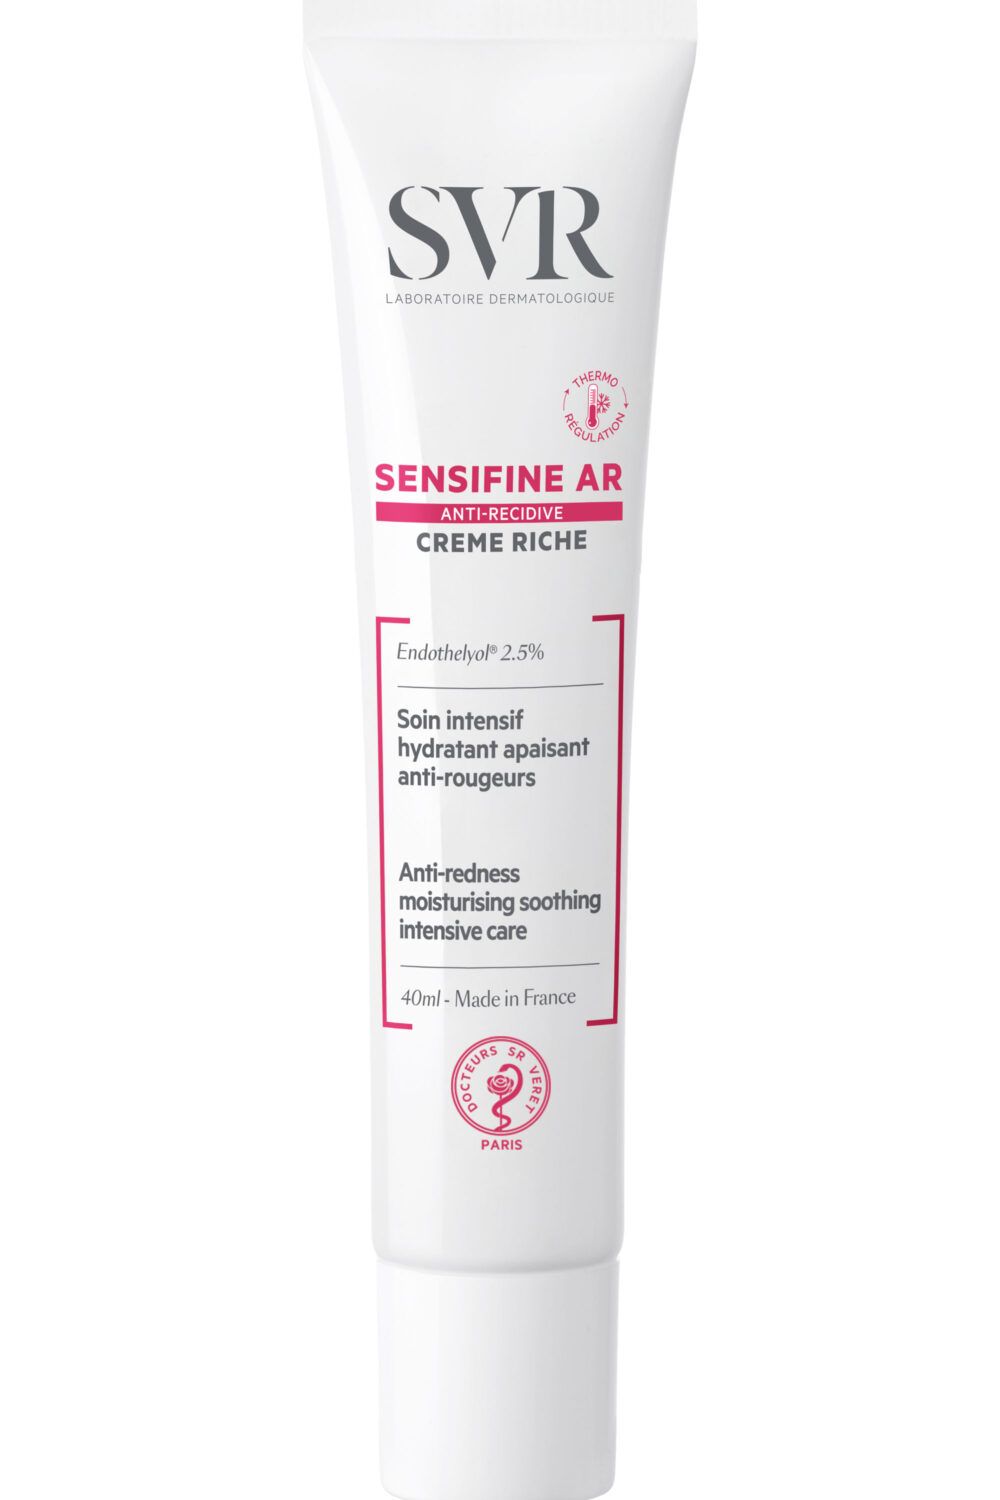 SVR - Soin intensif hydratant apaisant anti-rougeurs Sensifine AR Creme Riche